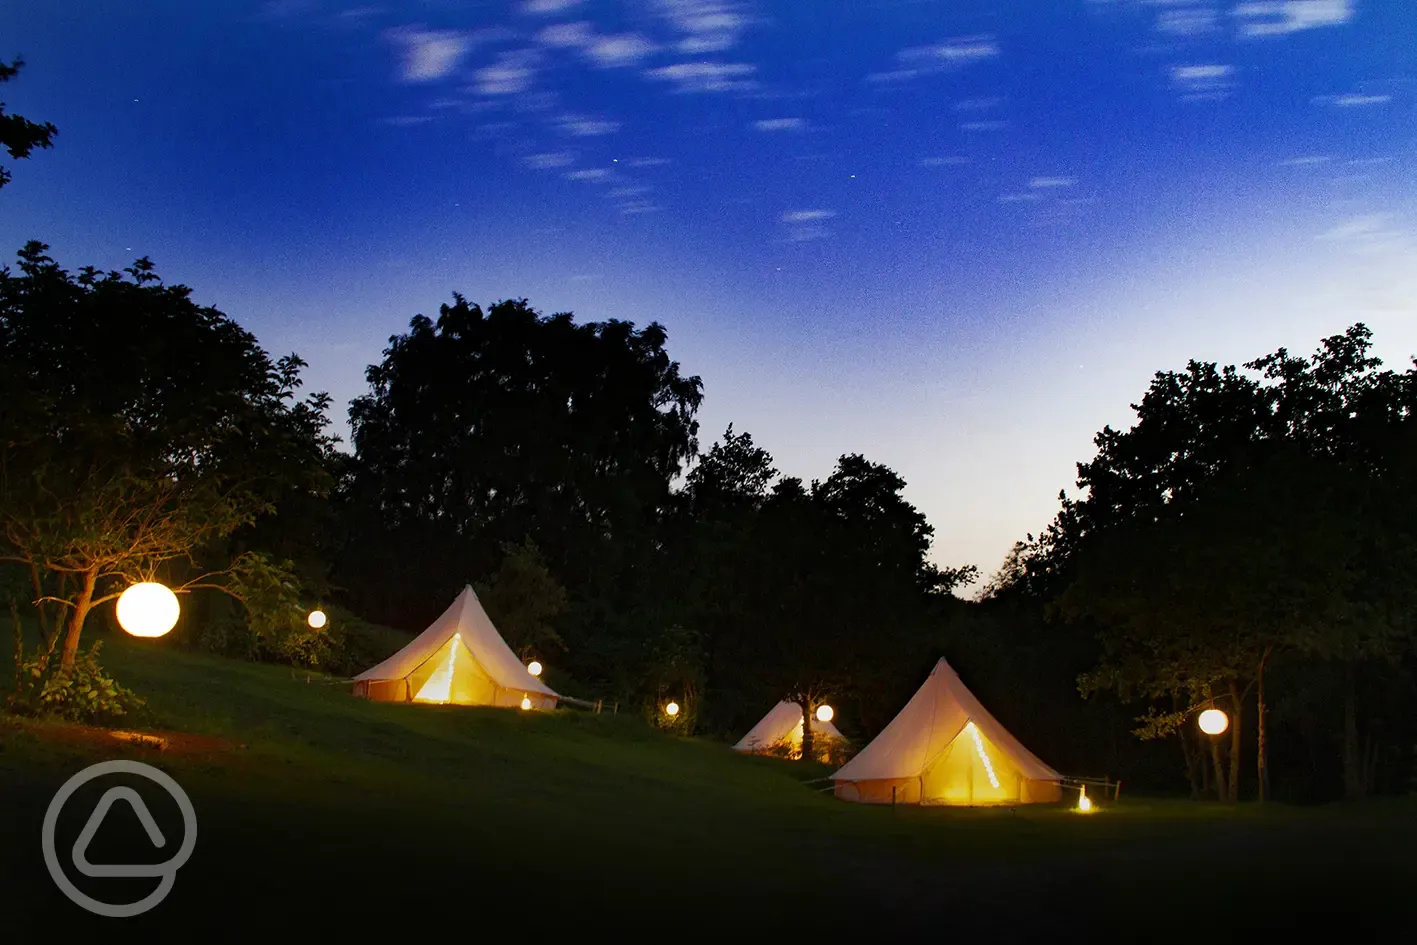 Lloyds meadow bell tent